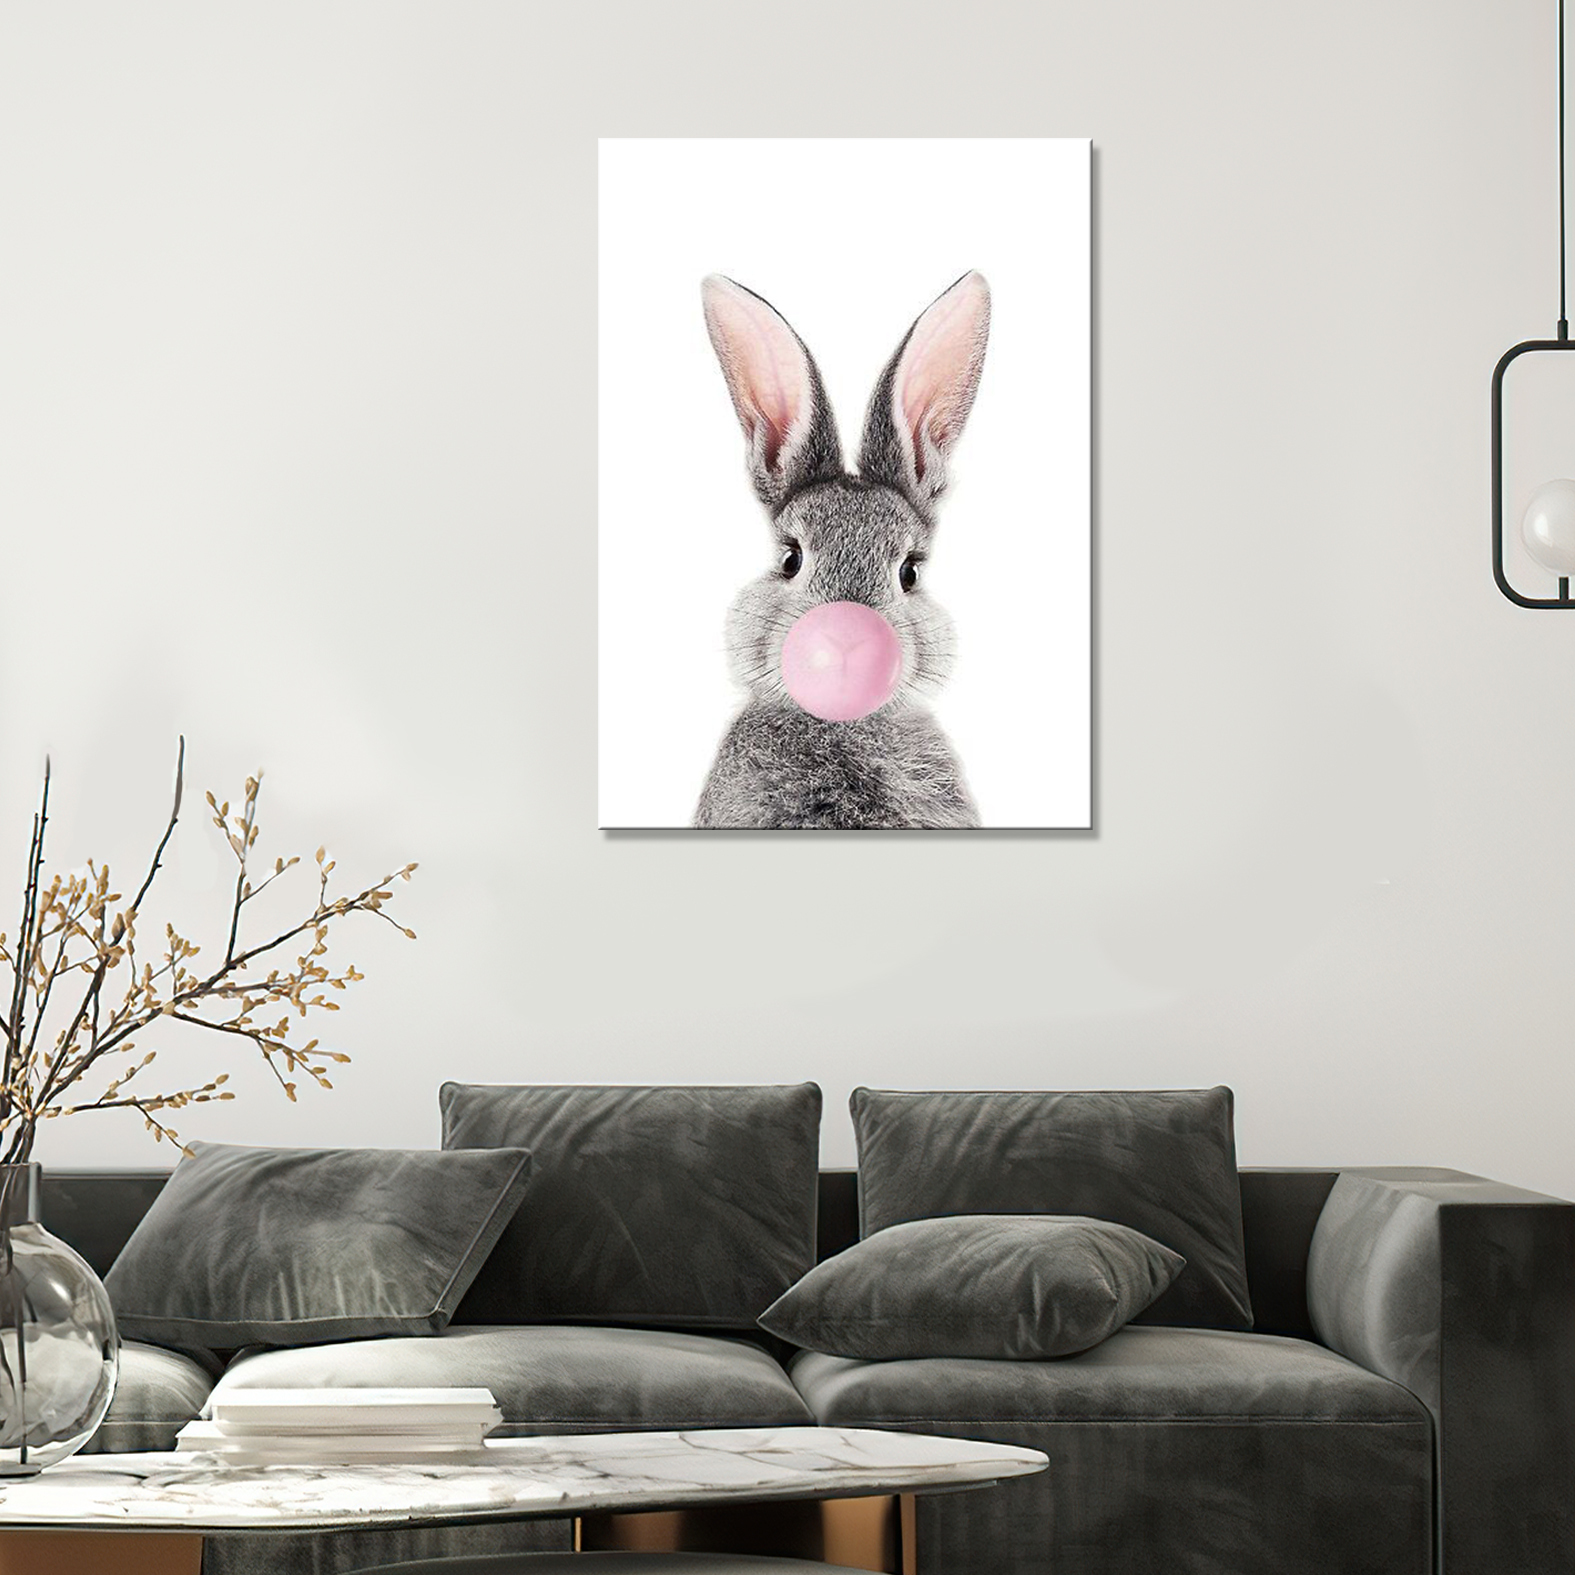 Office krolik. Кролик в интерьергых картинках. Кролик интерьерная картина. Кролик на холсте. Картины кролики в интерьере.